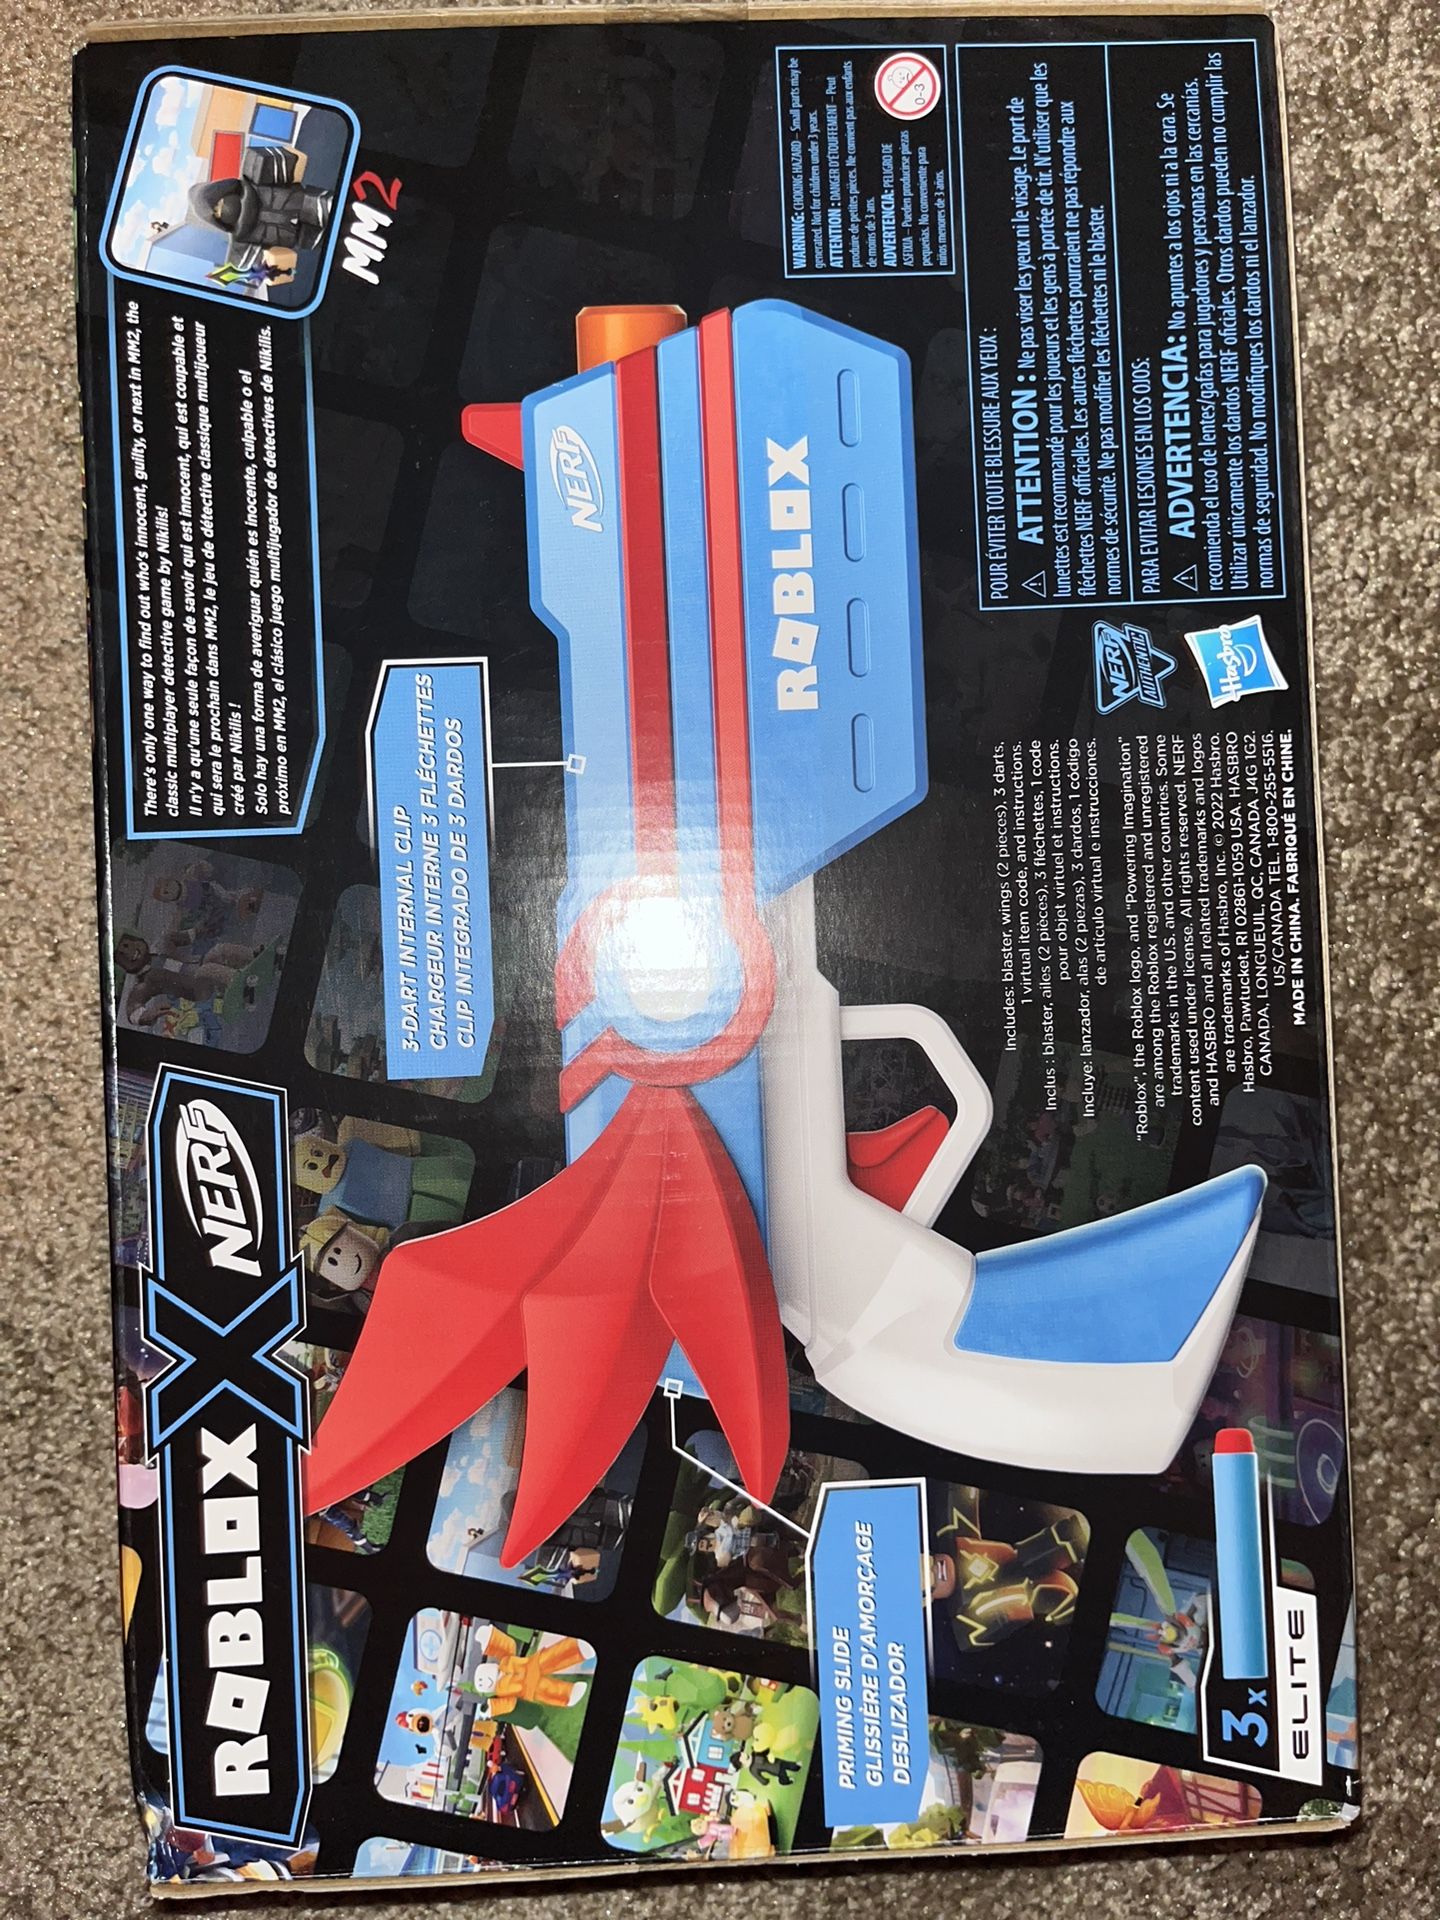 Nerf Roblox MM2: Dartbringer Dart Blaster, Toymate